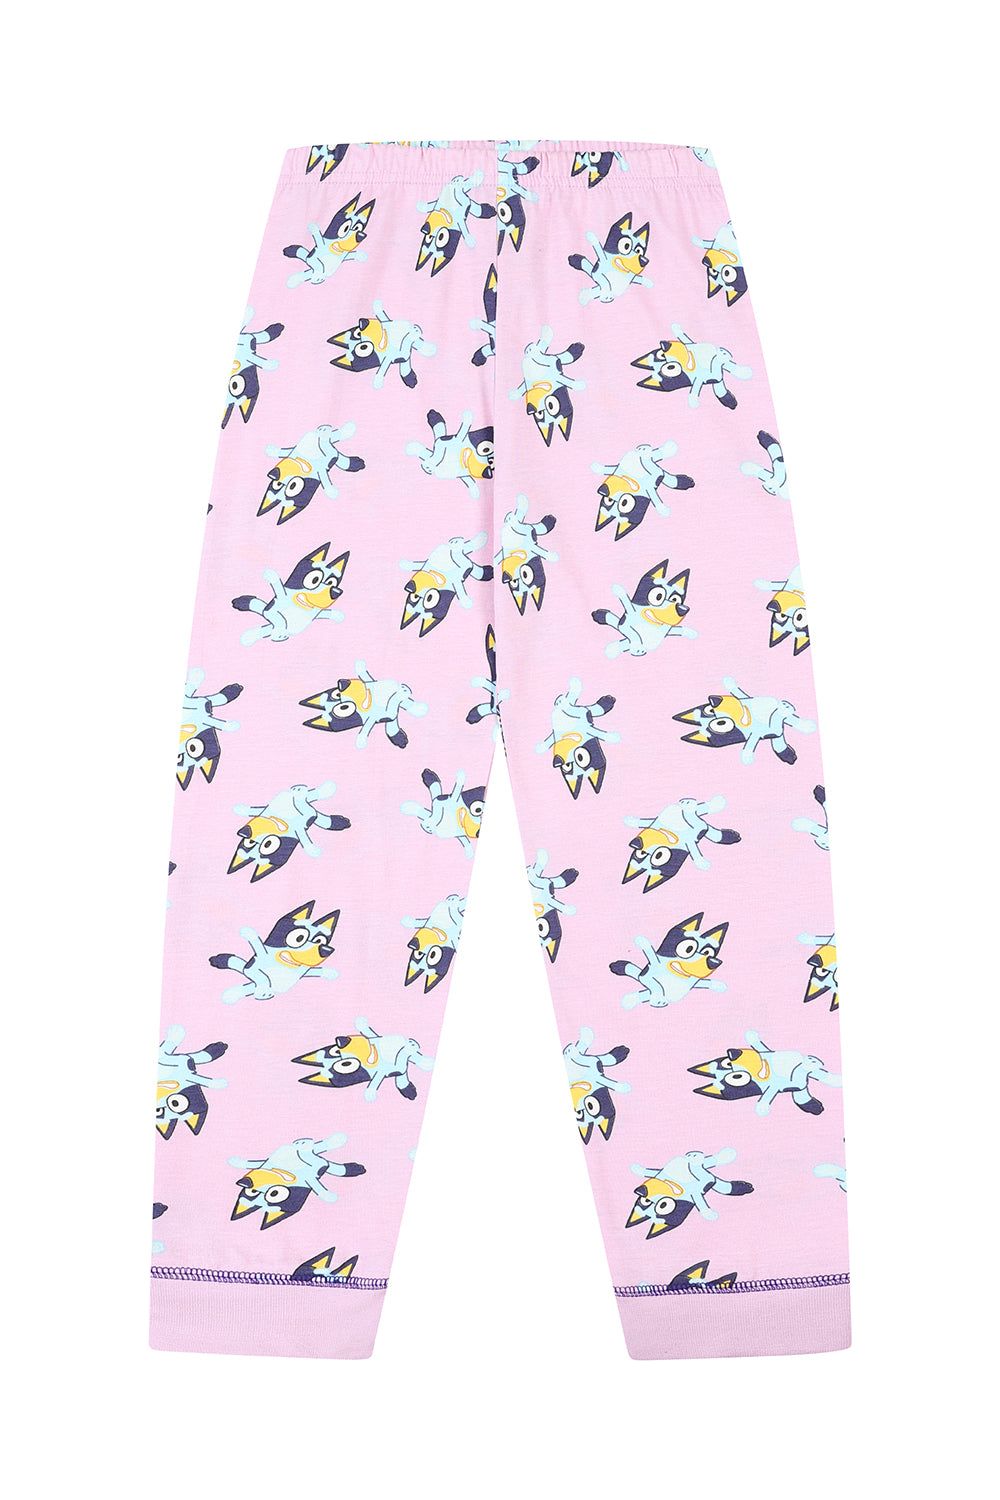 Girls Bluey and Bingo Queens Pink Long Pyjamas 2 to 6 Years